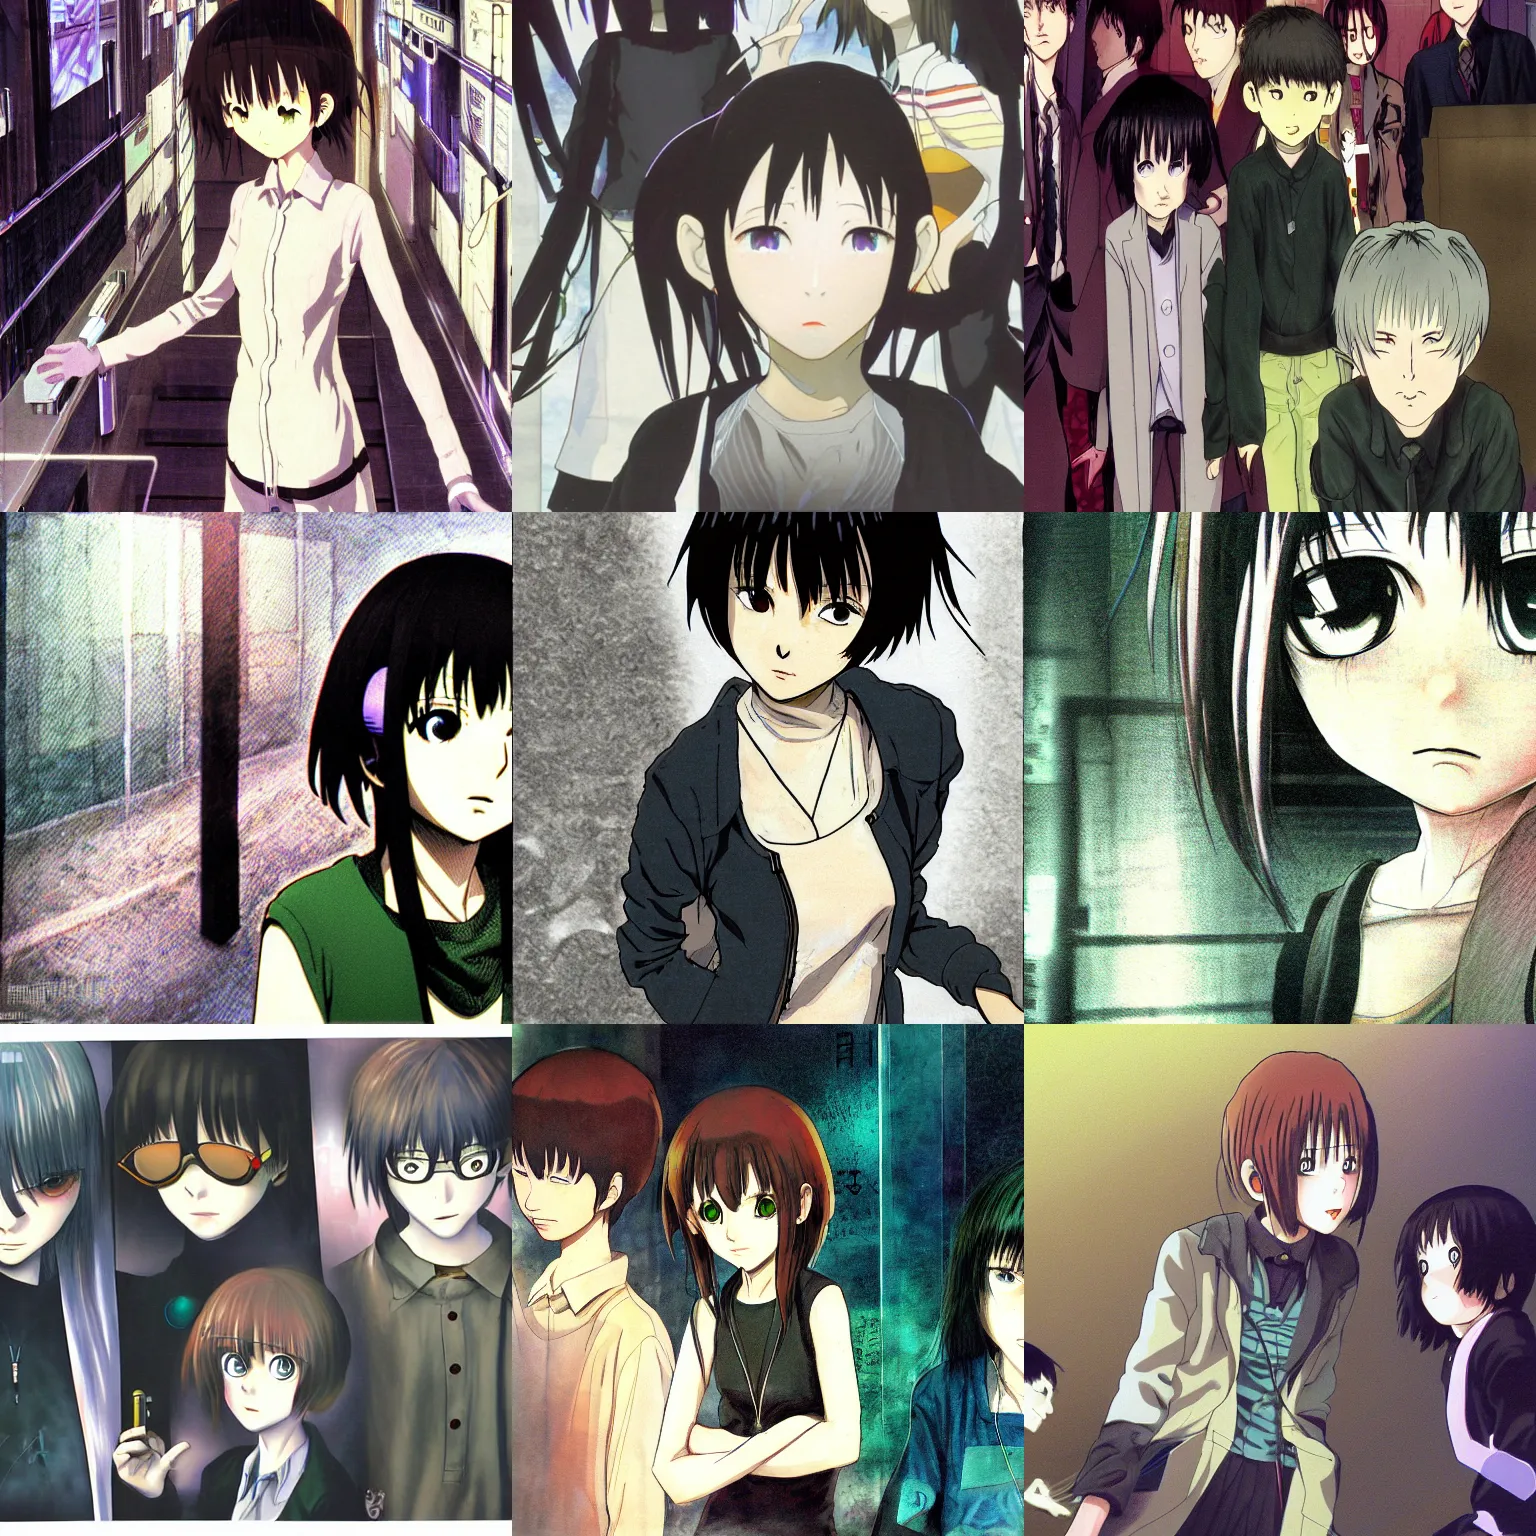 Serial Experiments Lain - Anime Review | The Otaku's Study